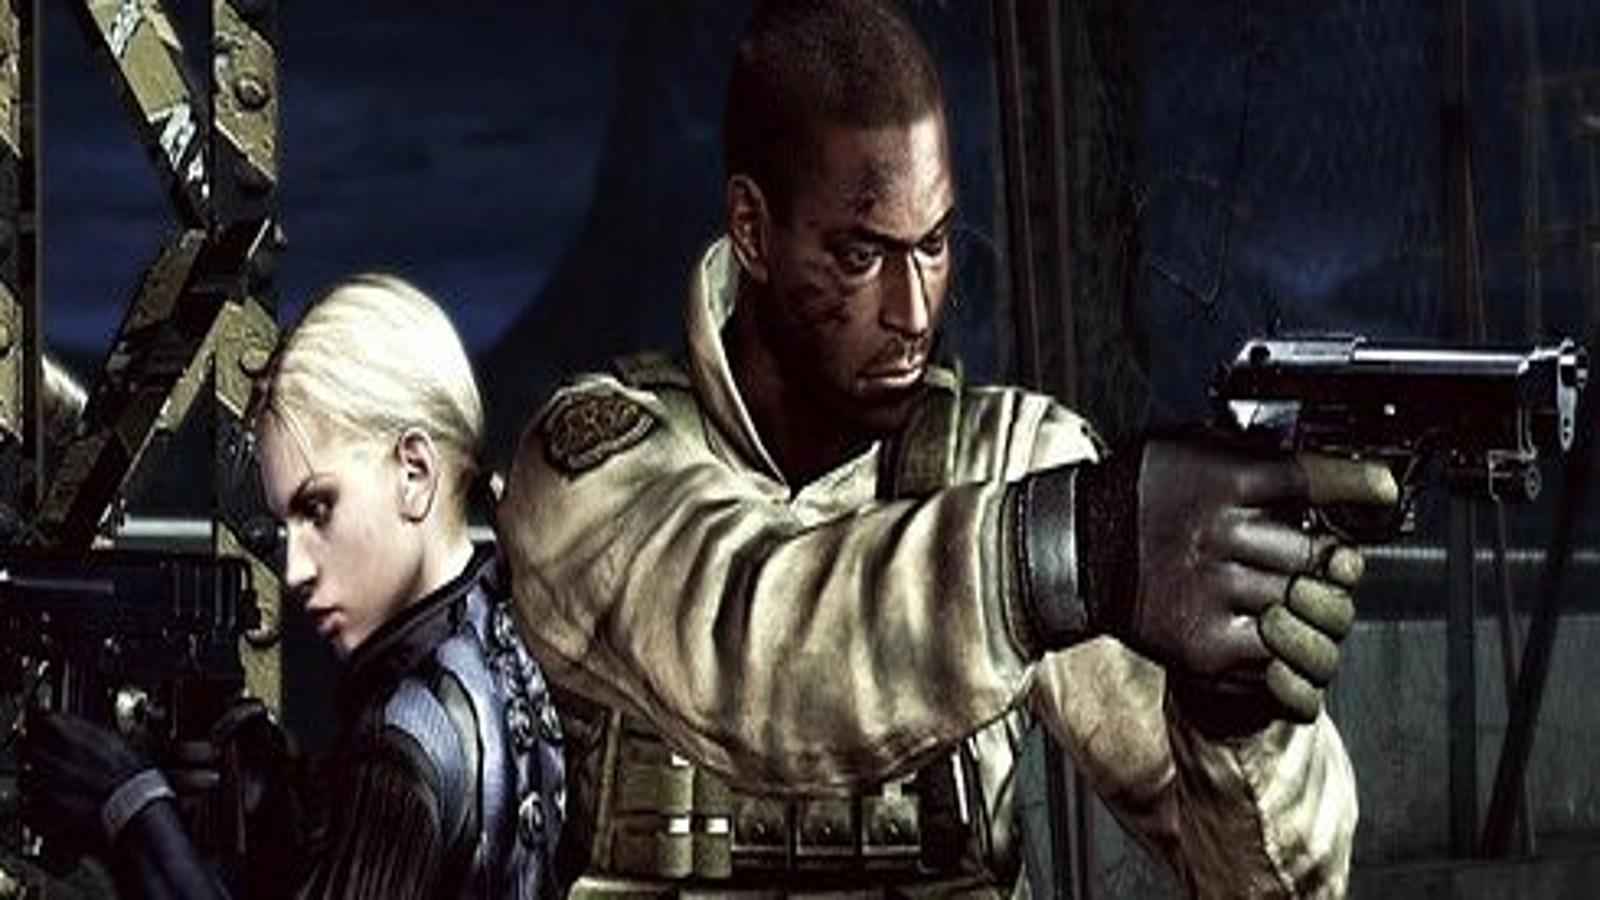 Resident Evil 5 - Desperate Escape Hands-On - GameSpot